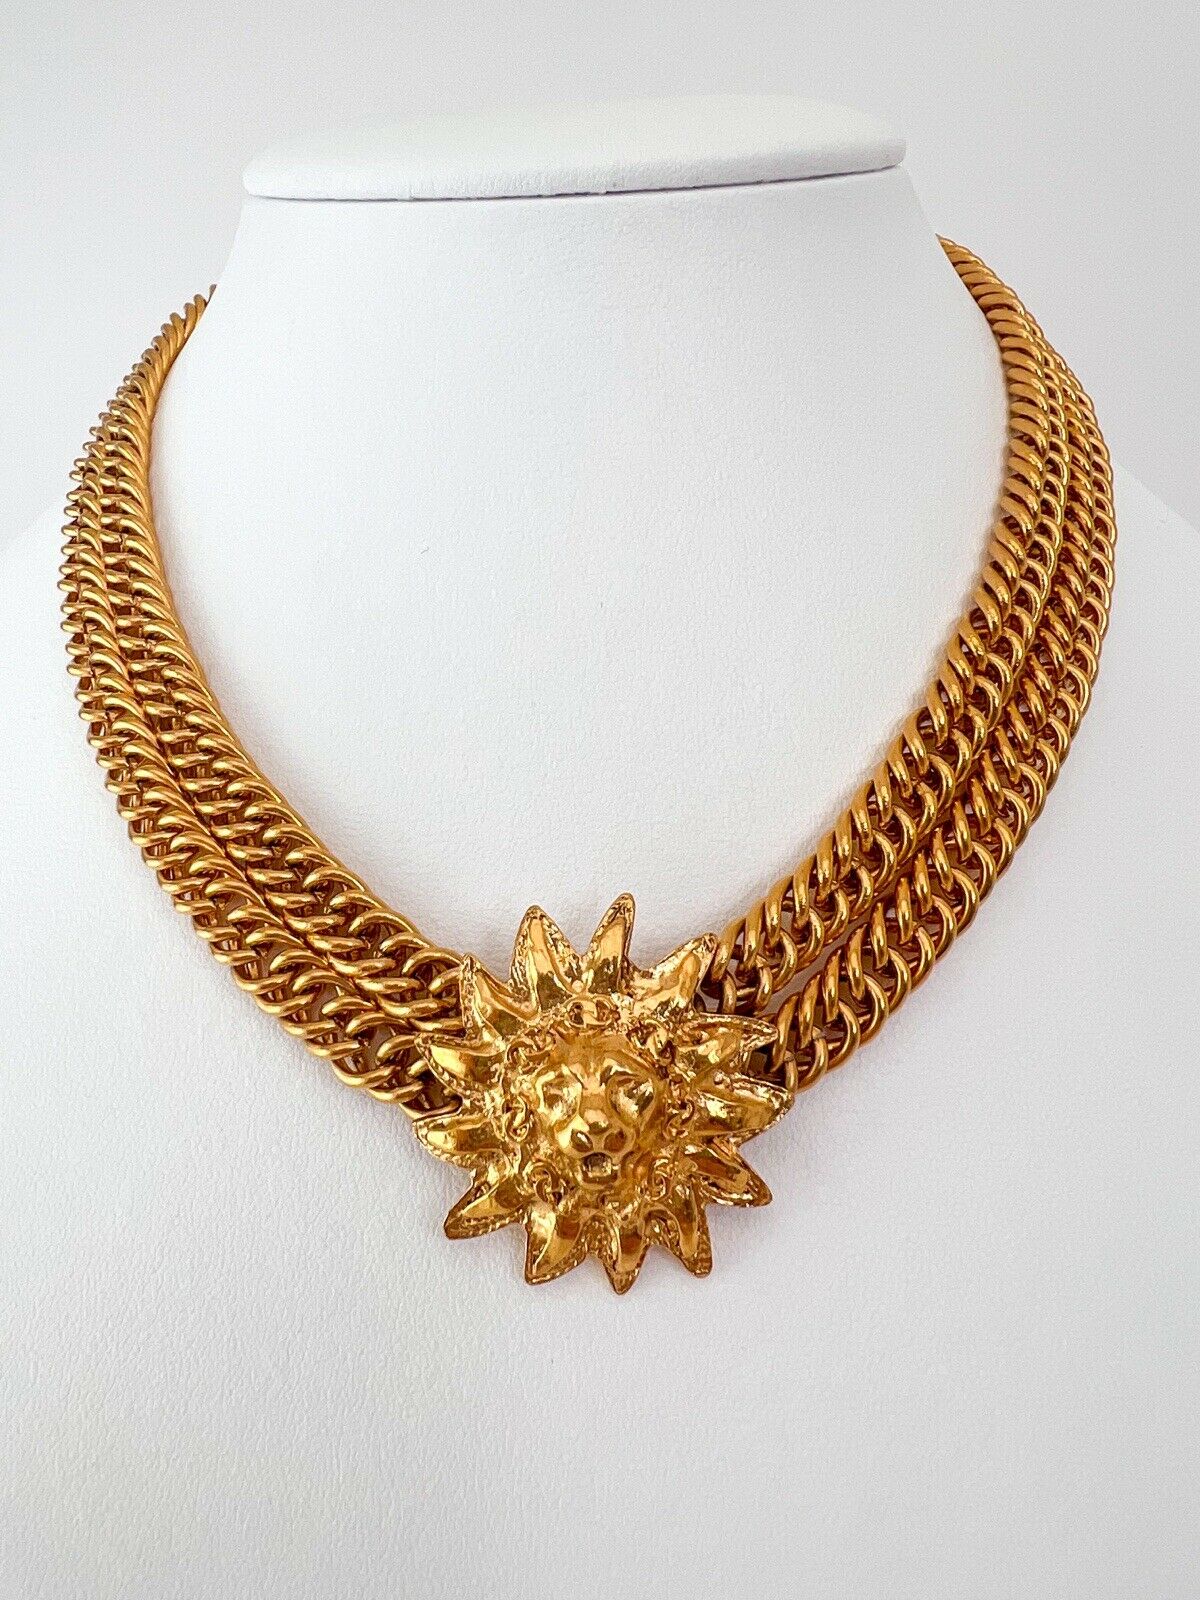 Chanel Vintage Necklace Gold